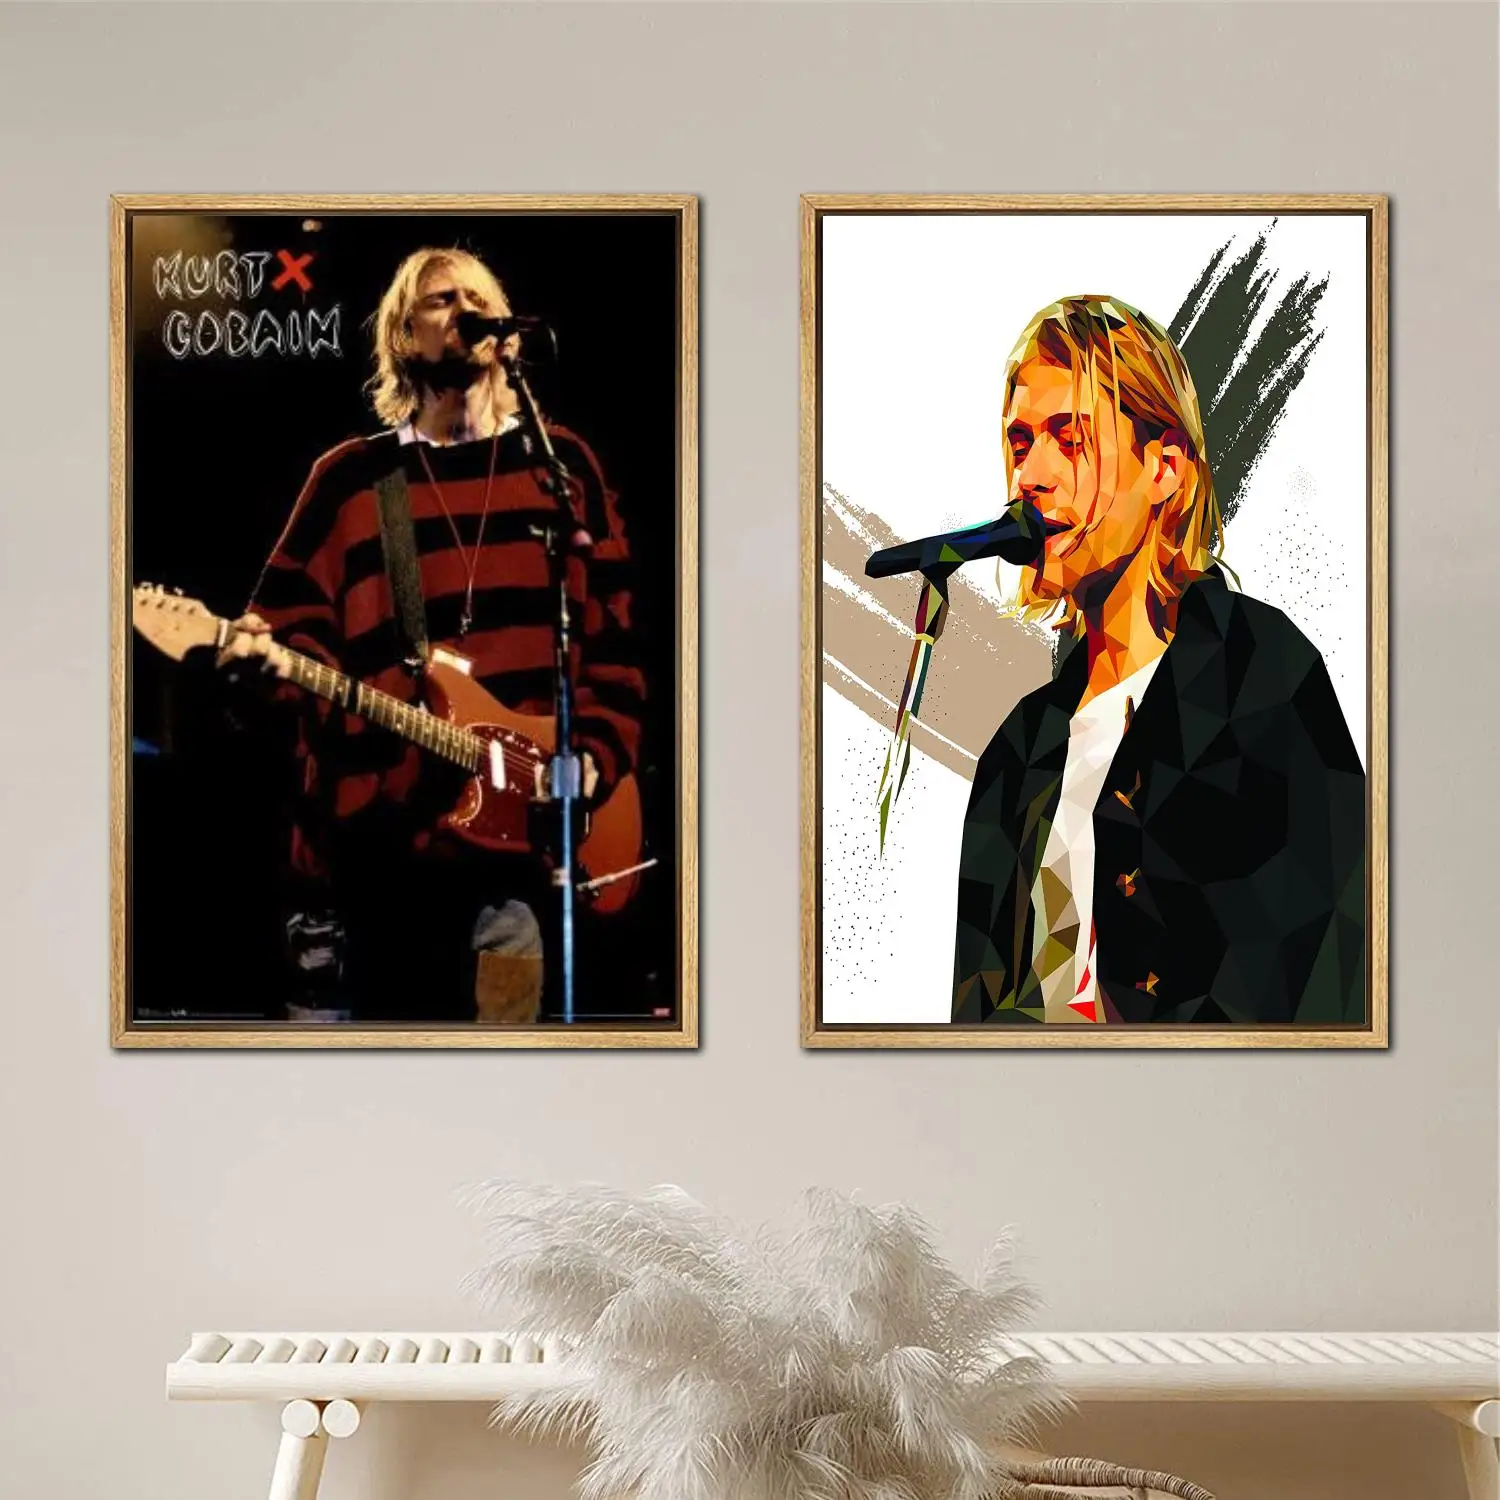 

Kurt Cobain Poster Painting 24x36 Wall Art Canvas Posters room decor Modern Family bedroom Decoration Art wall decor